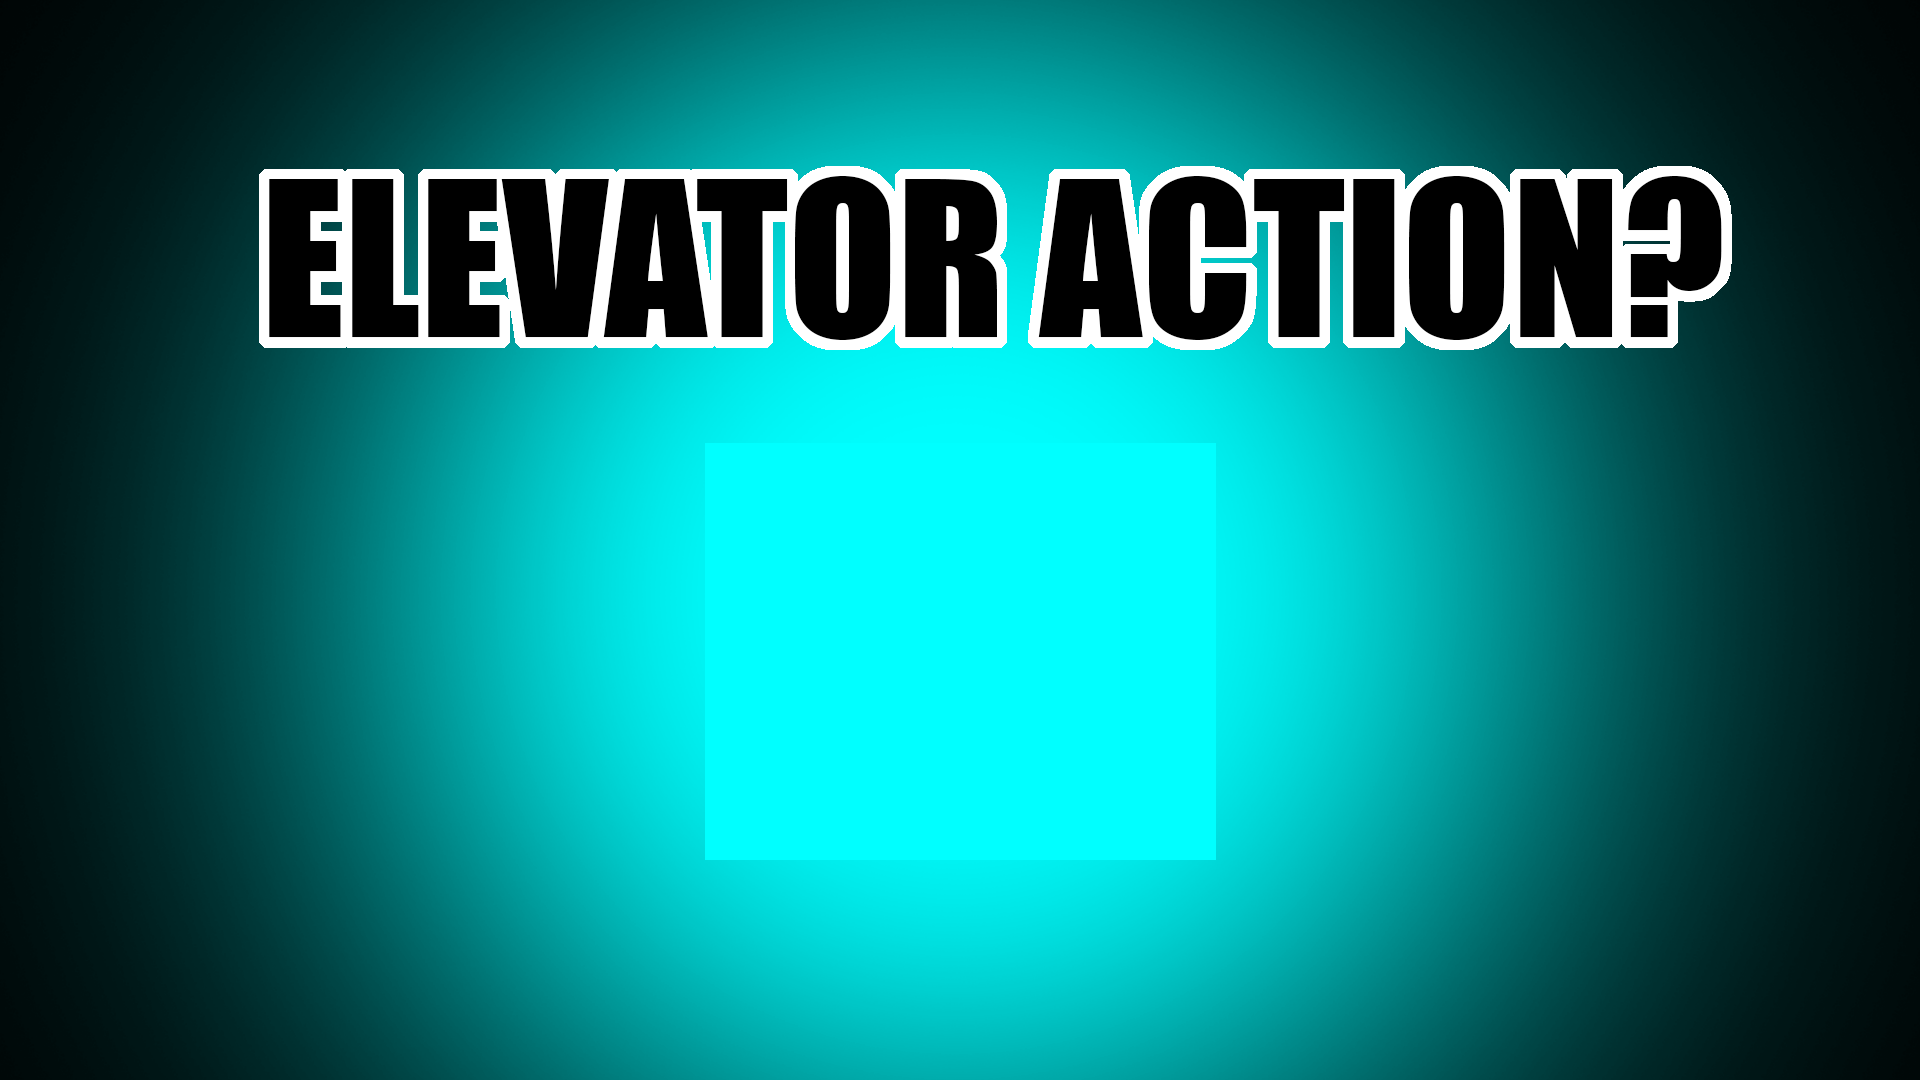 Elevator Action?